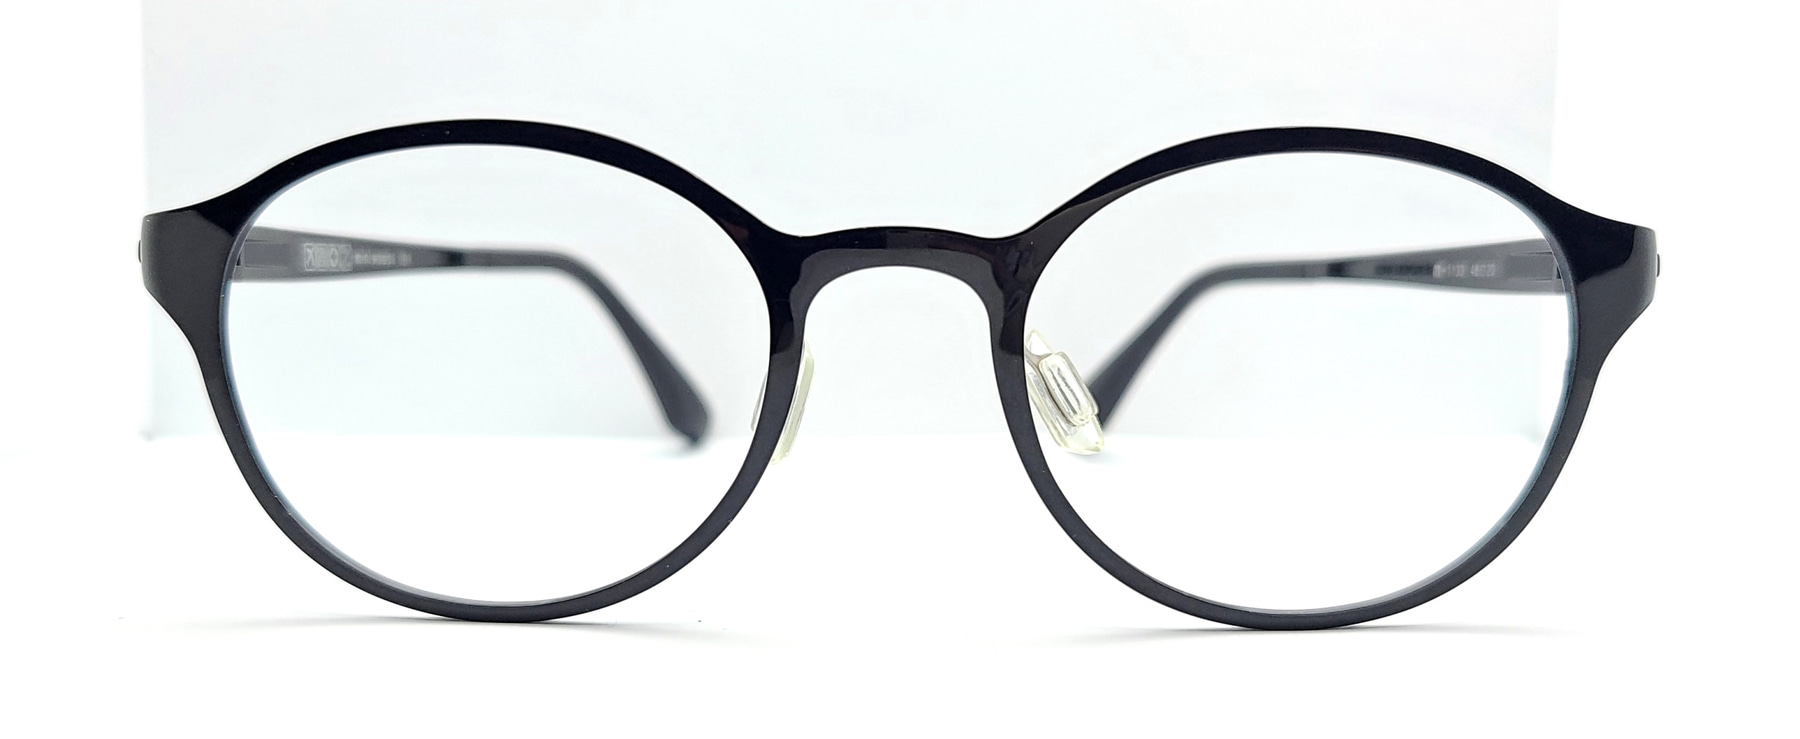 MINIHOUSE M-1133, Korean glasses, sunglasses, eyeglasses, glasses